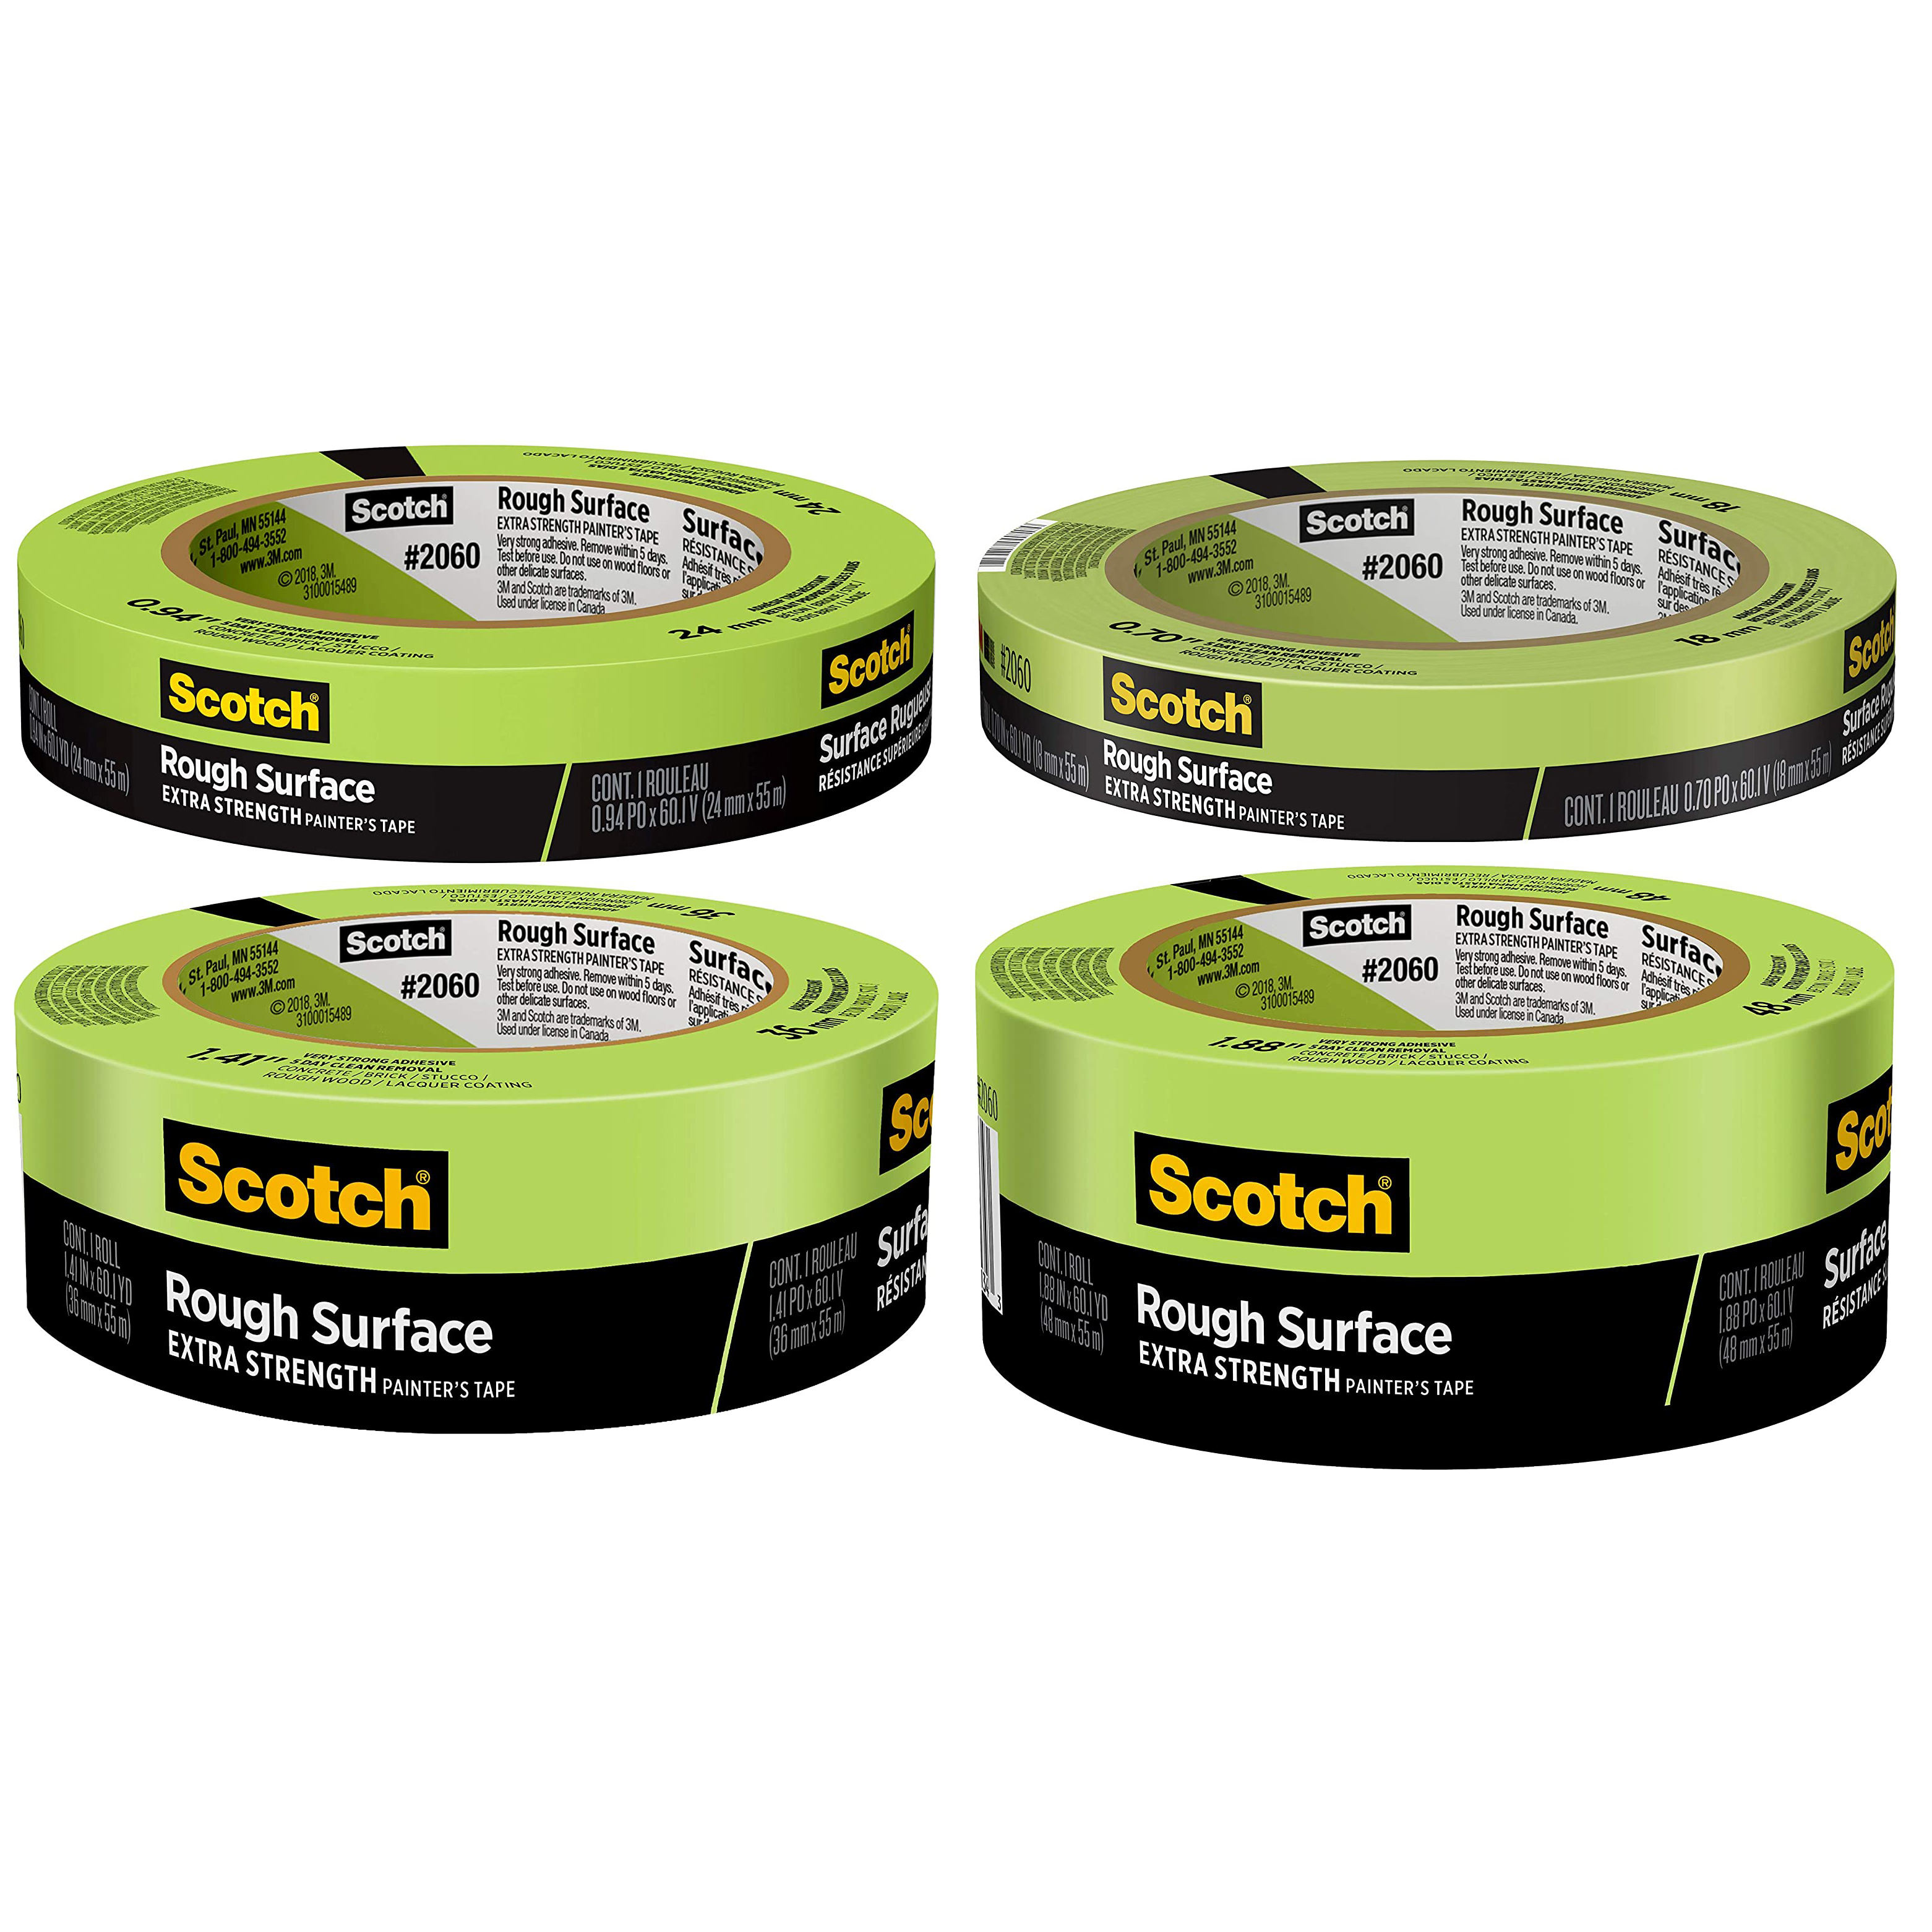 SCOTCH 2060-1.5A Masking Tape,Green,1-1/2 In x 60 Yd,PK24 